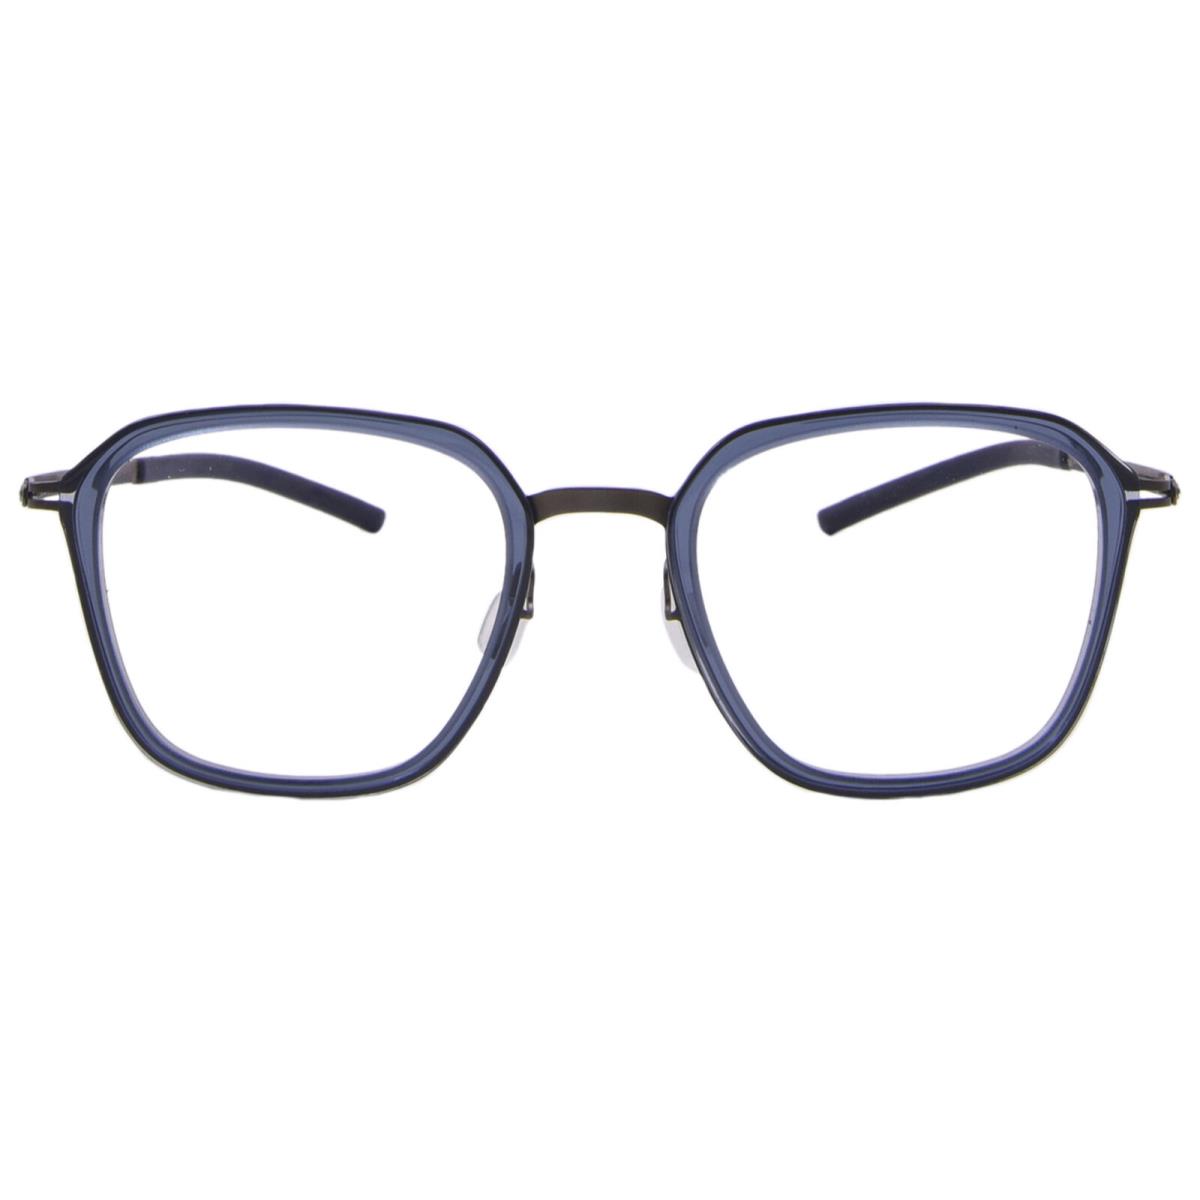 Ic Berlin Rio Eyeglasses Graphite/blue Waters/marine Blue Full Rim 48mm